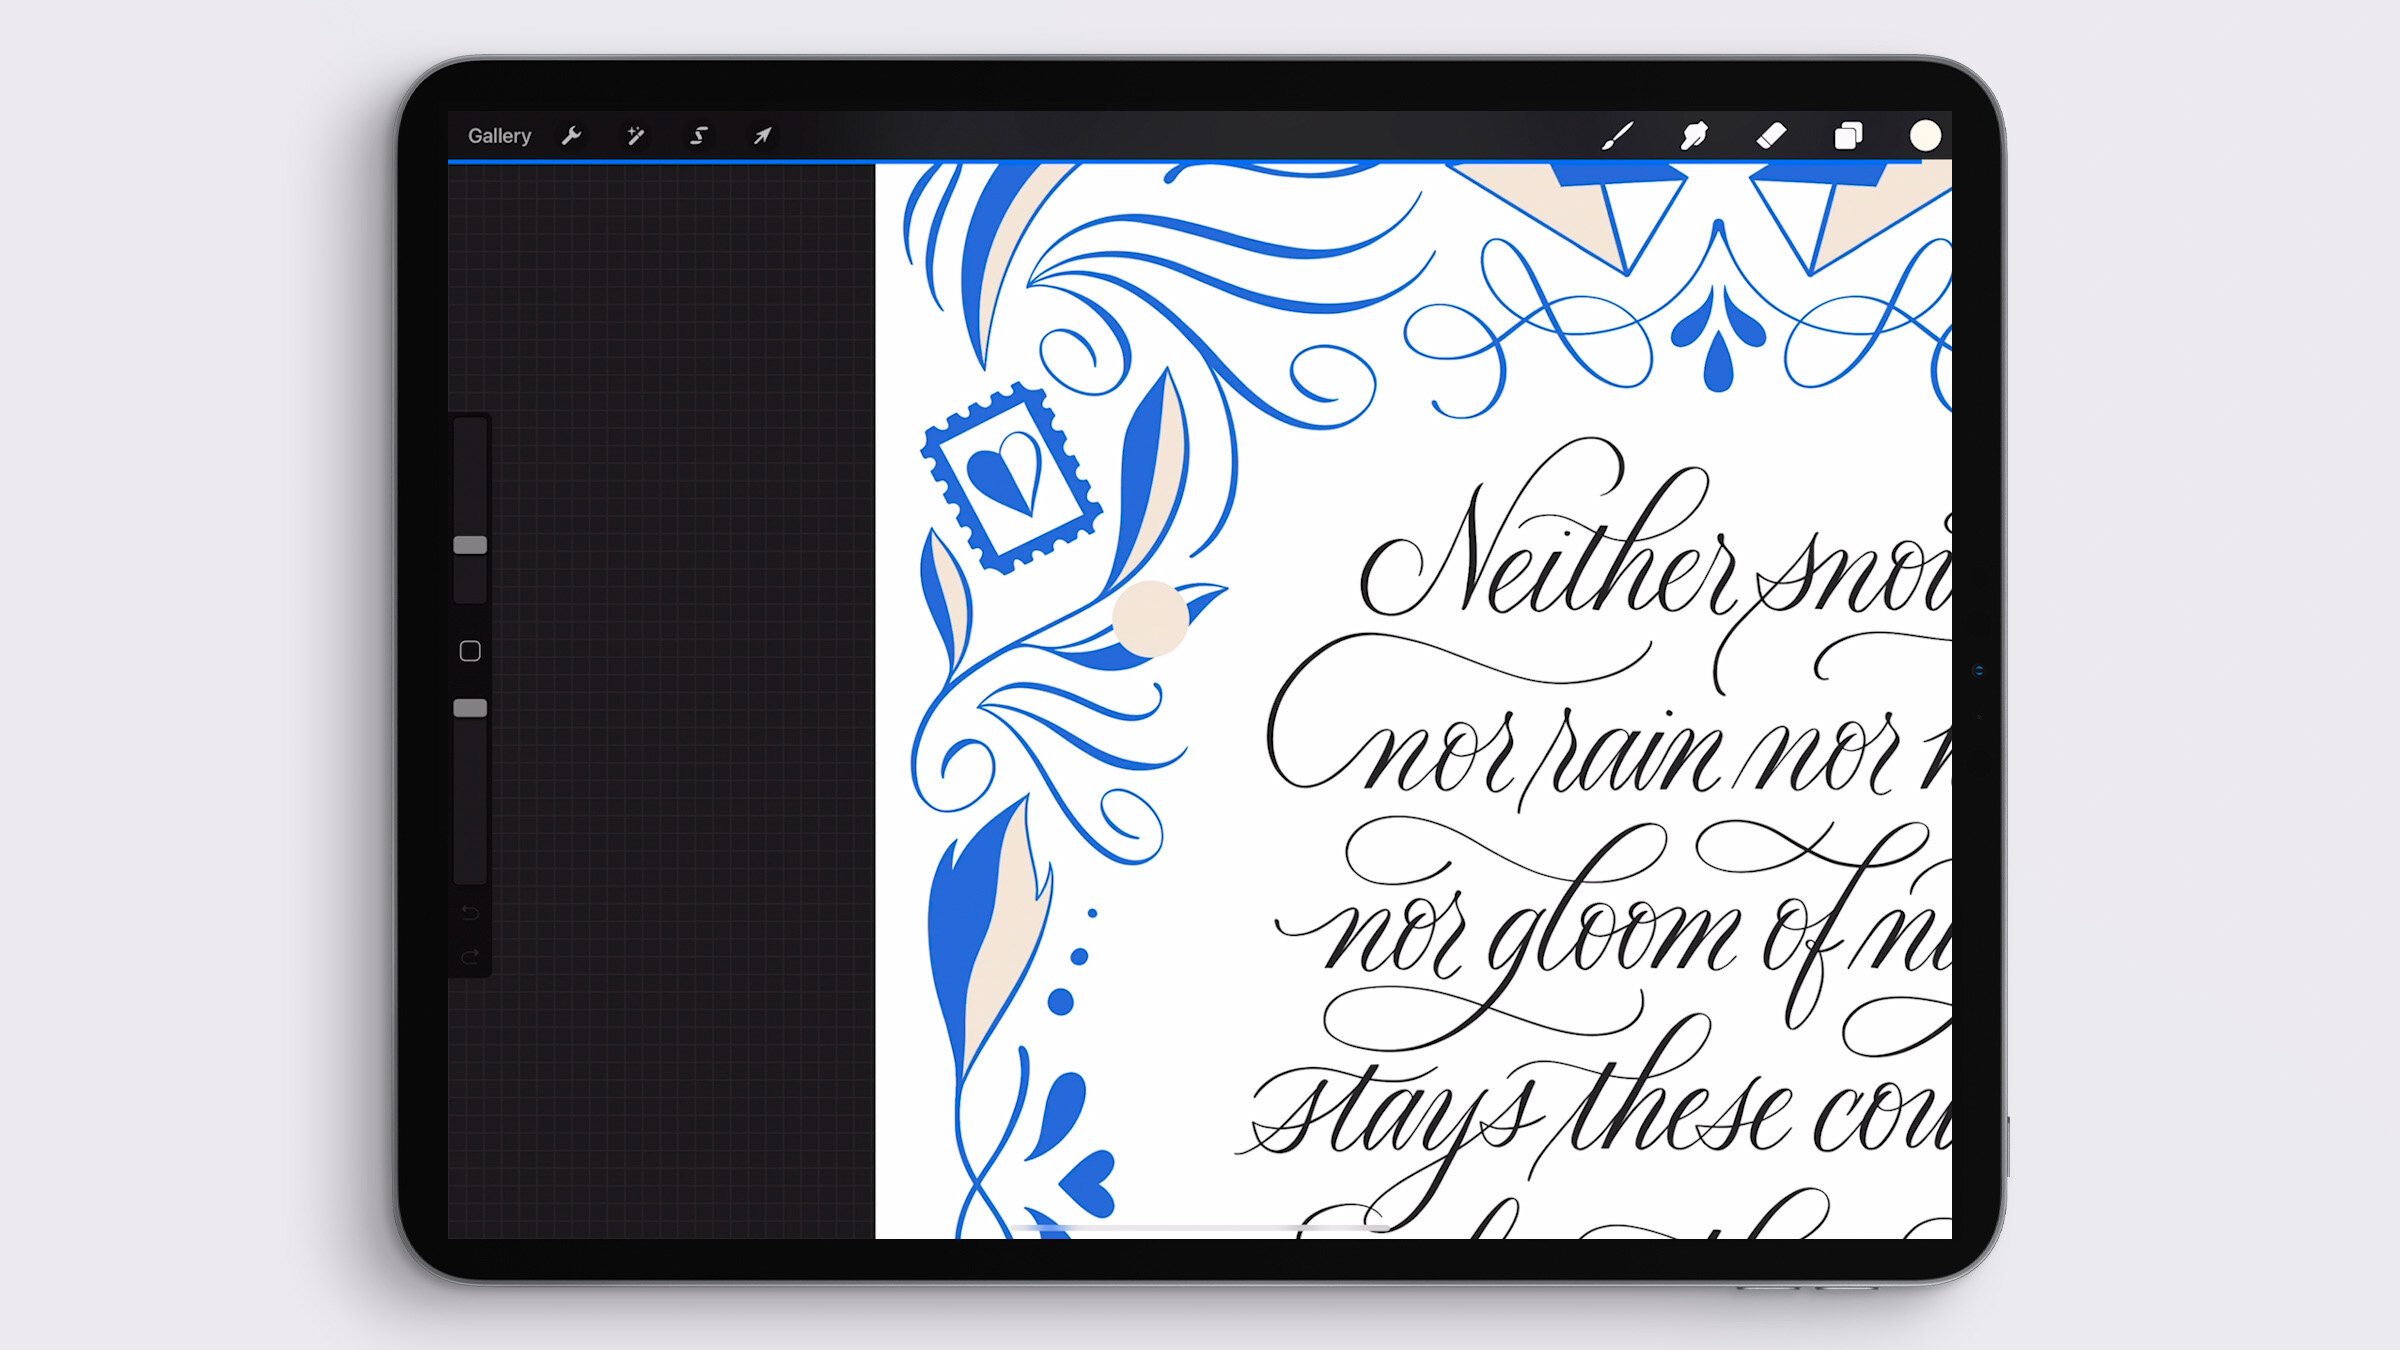 Turn your iPad into a lightbox - iPad Calligraphy